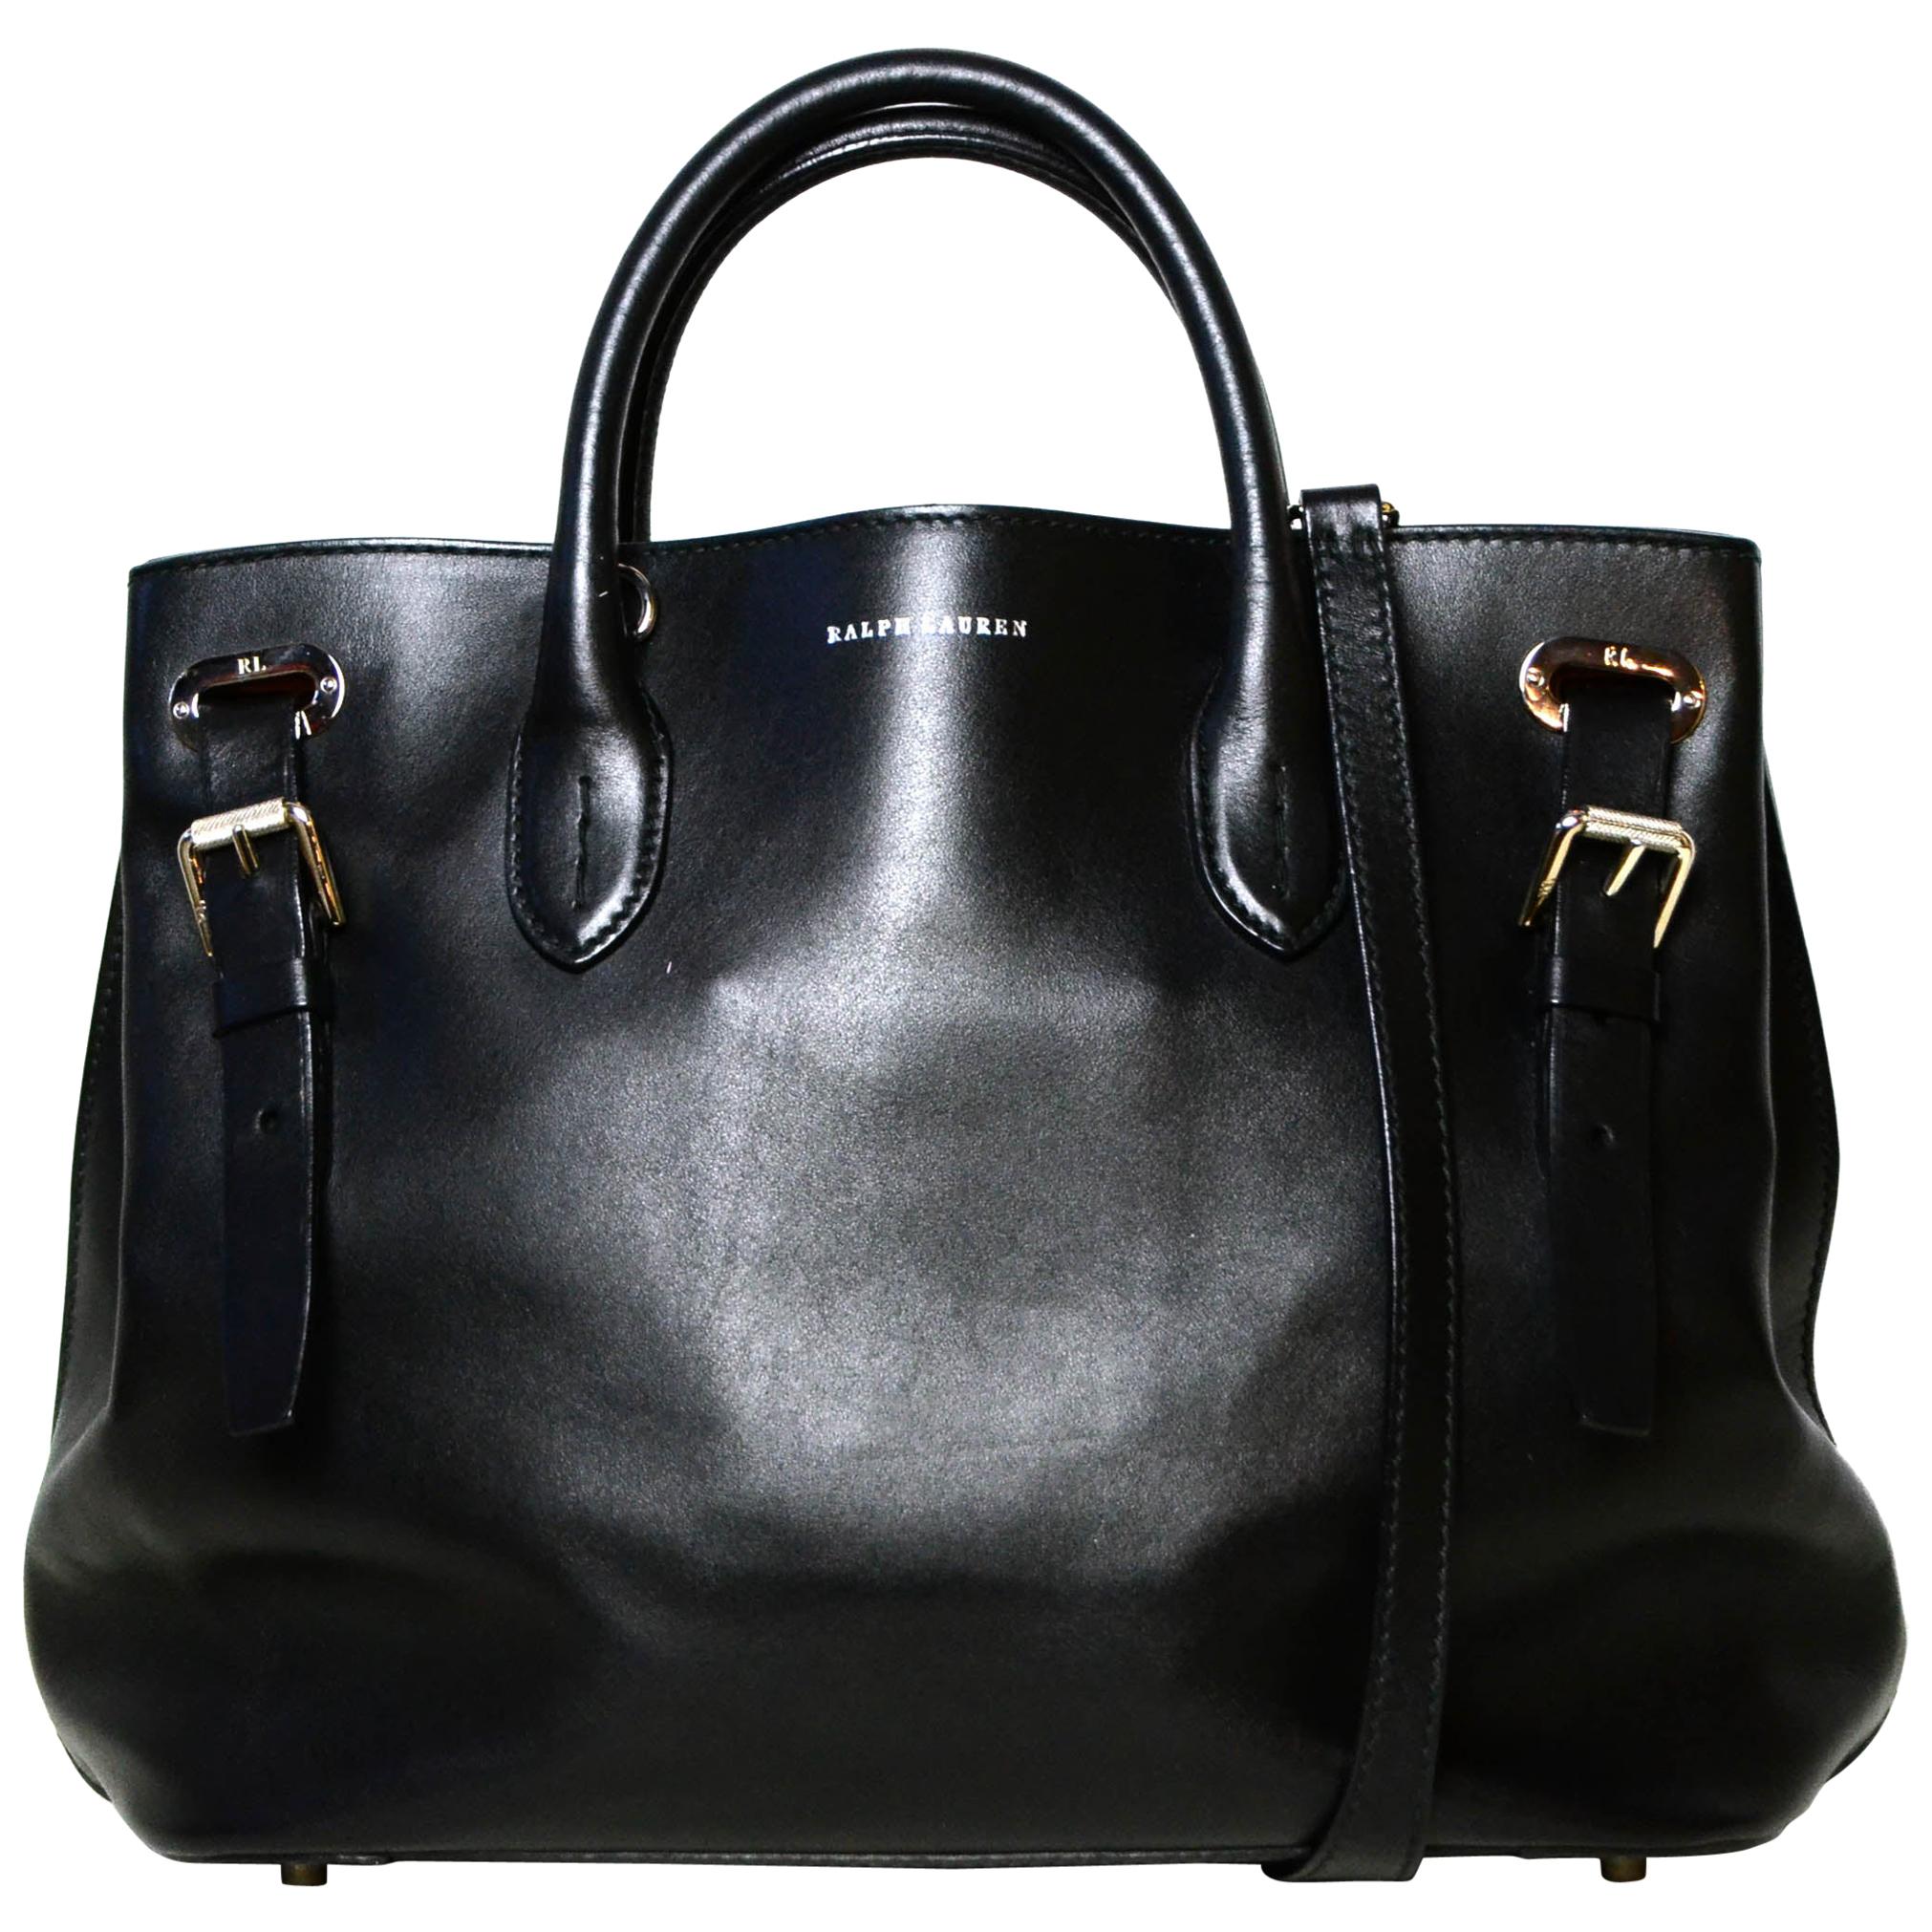 Ralph Lauren Black Leather Buckle Tote Bag W/ Strap